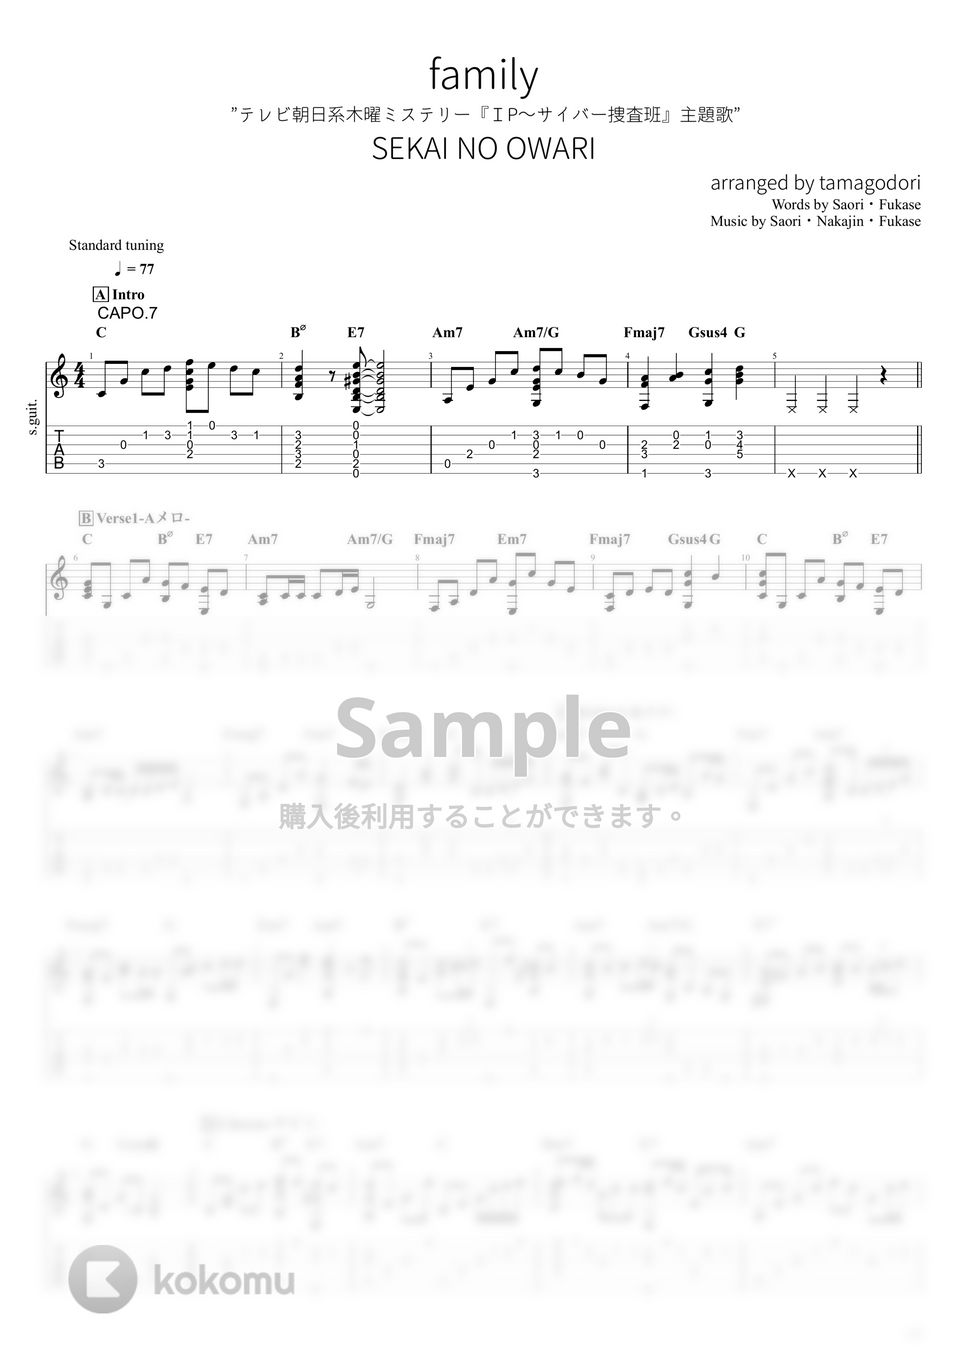 SEKAI NO OWARI - family (ソロギター) by たまごどり